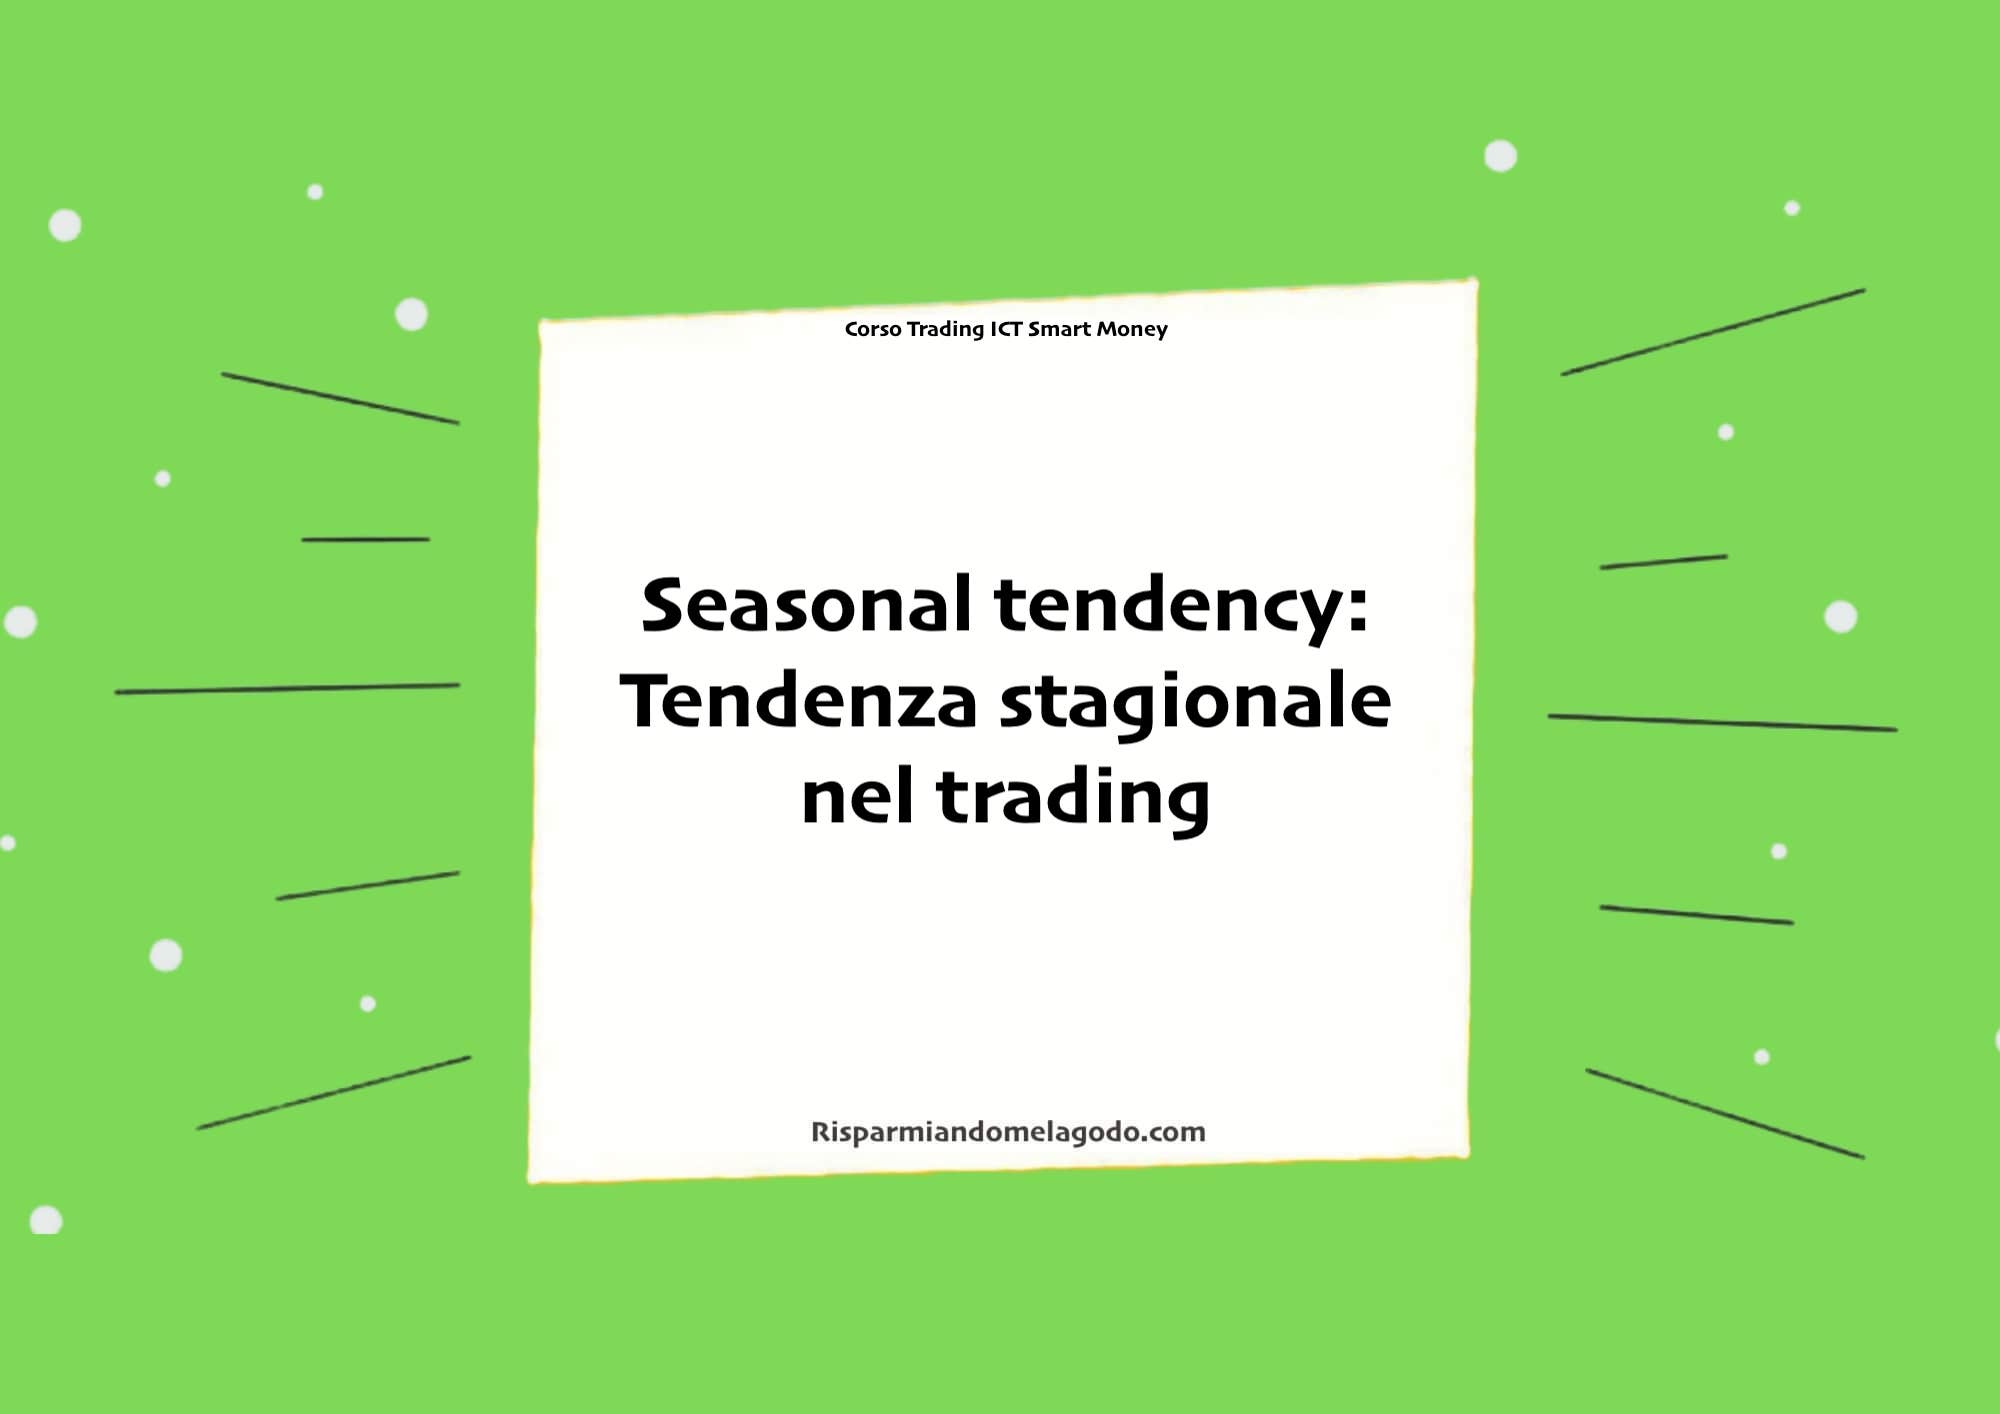 Seasonal tendency: Tendenza stagionale nel trading